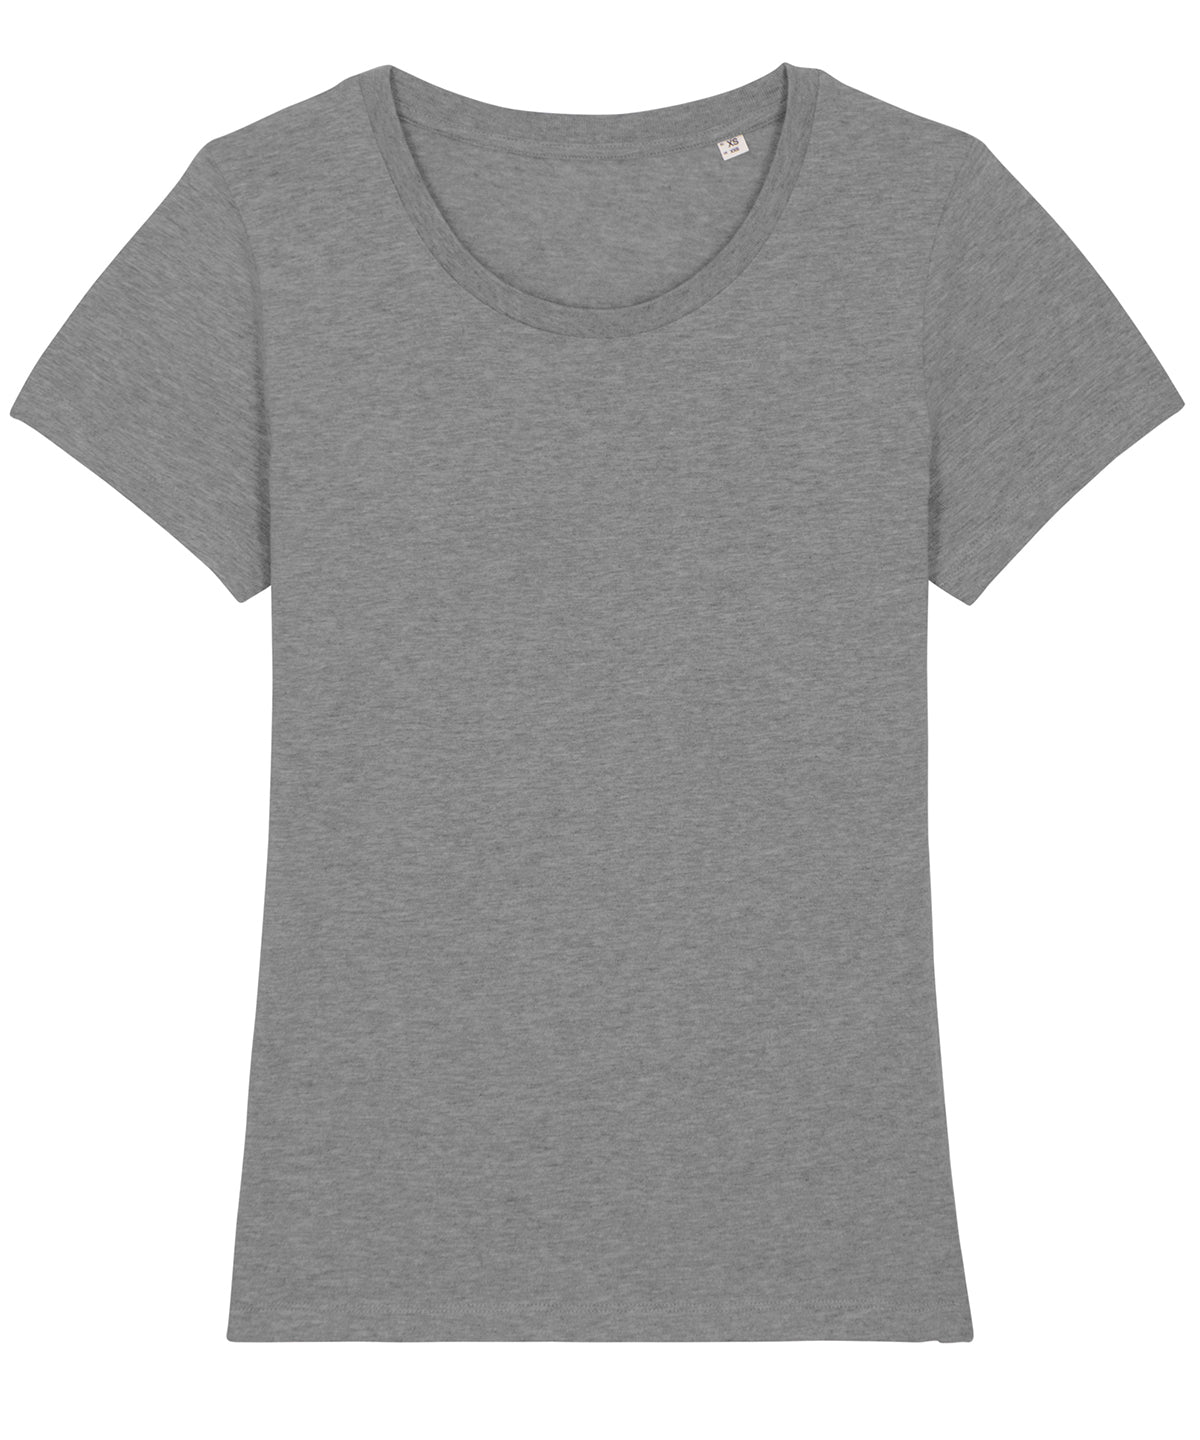 Women's Stella Expresser iconic fitted t-shirt (STTW032)